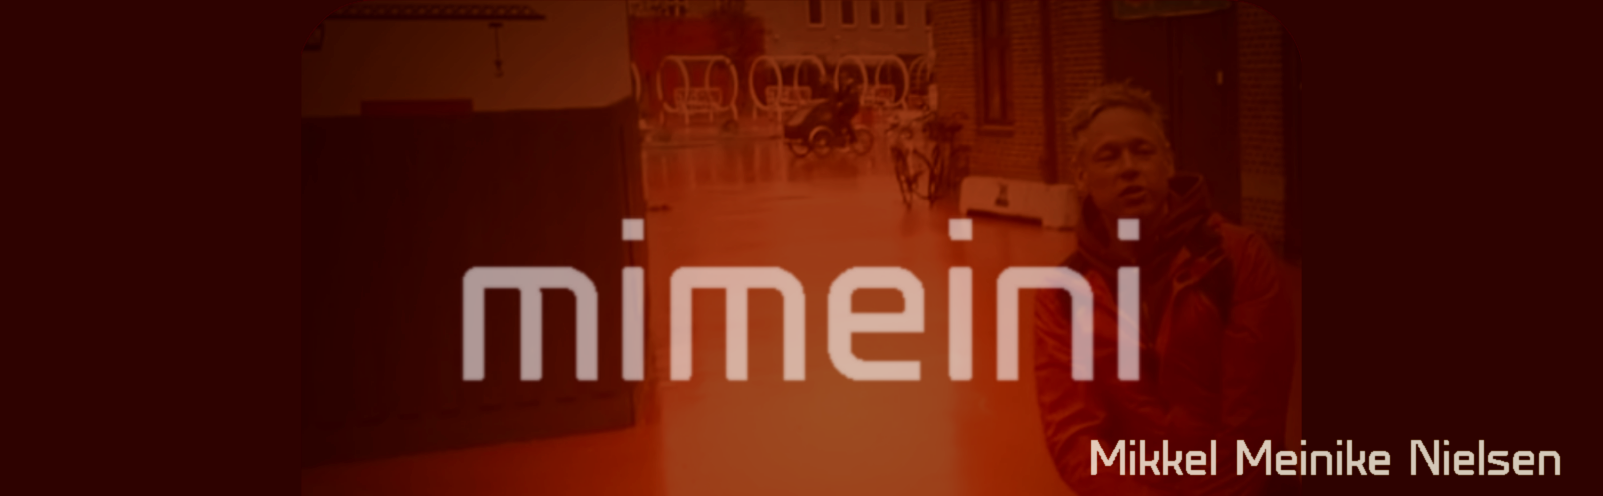 mimeini - Mikkel Meinike Nielse - header